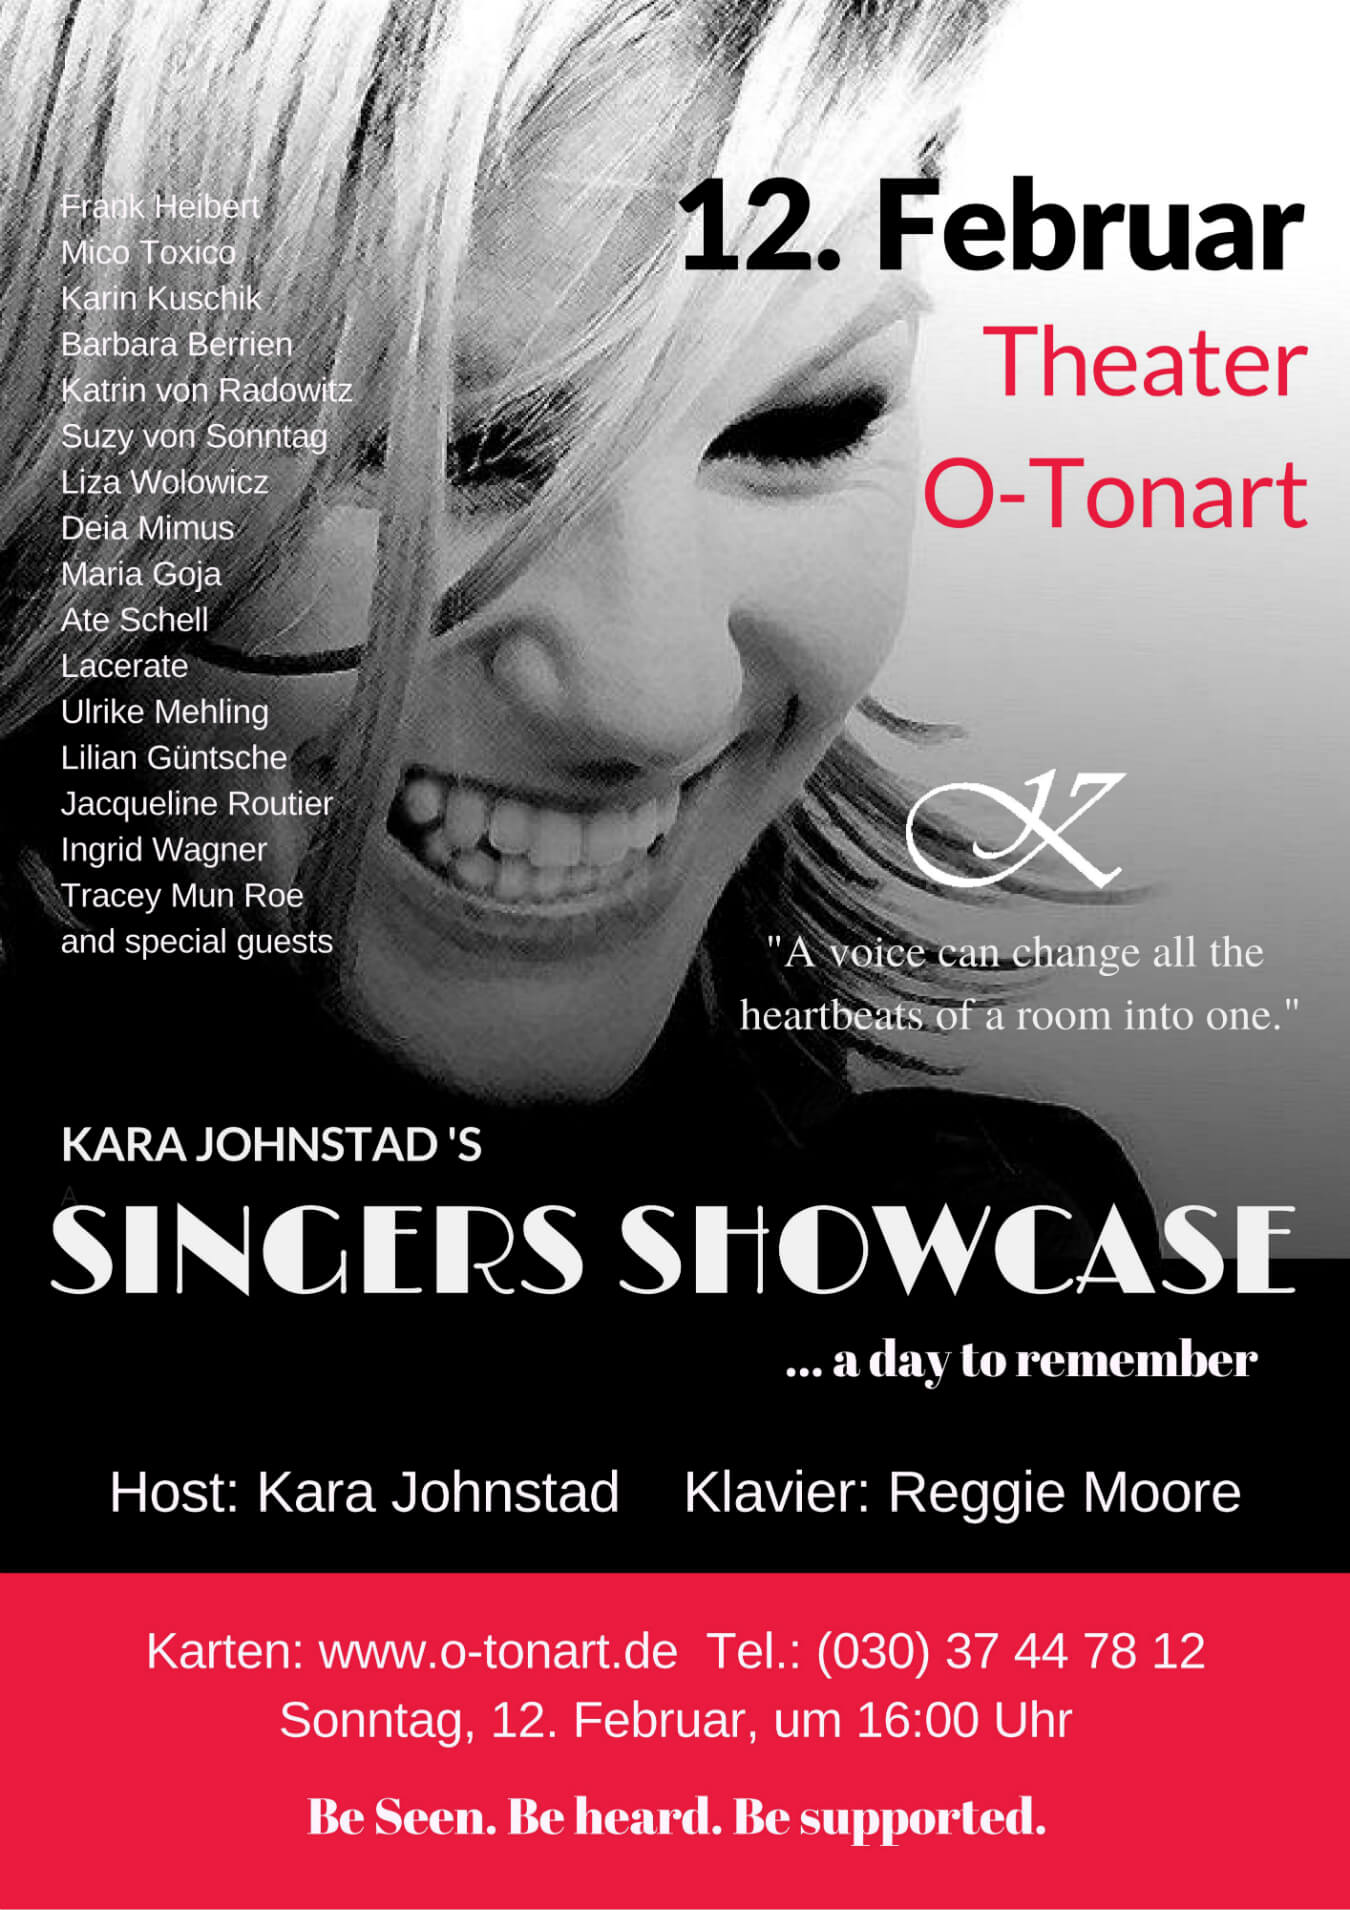 Kara Johnstad's SINGERS SHOWCASE at the Theater O-tonart